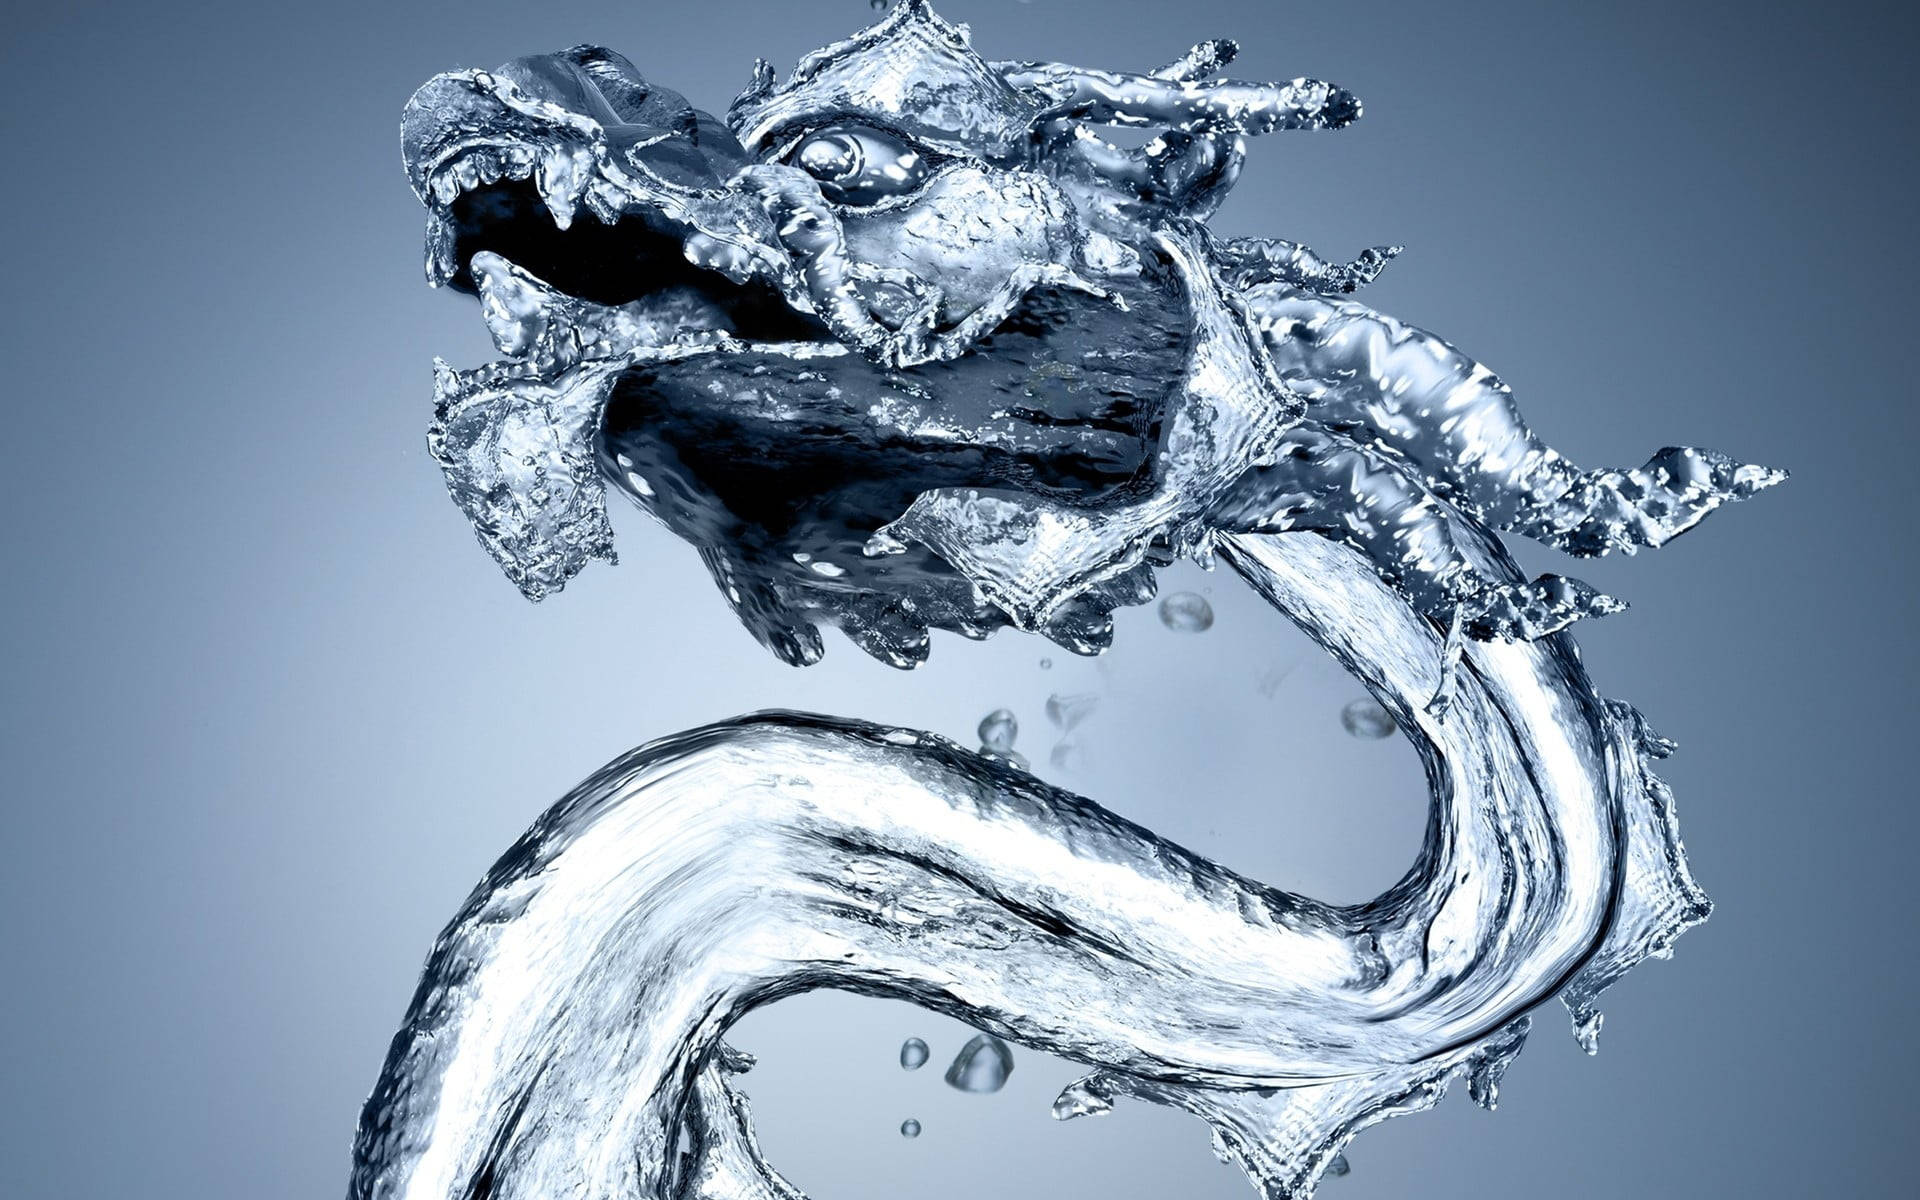 Top 999+ Water Dragon Wallpaper Full HD, 4K Free to Use